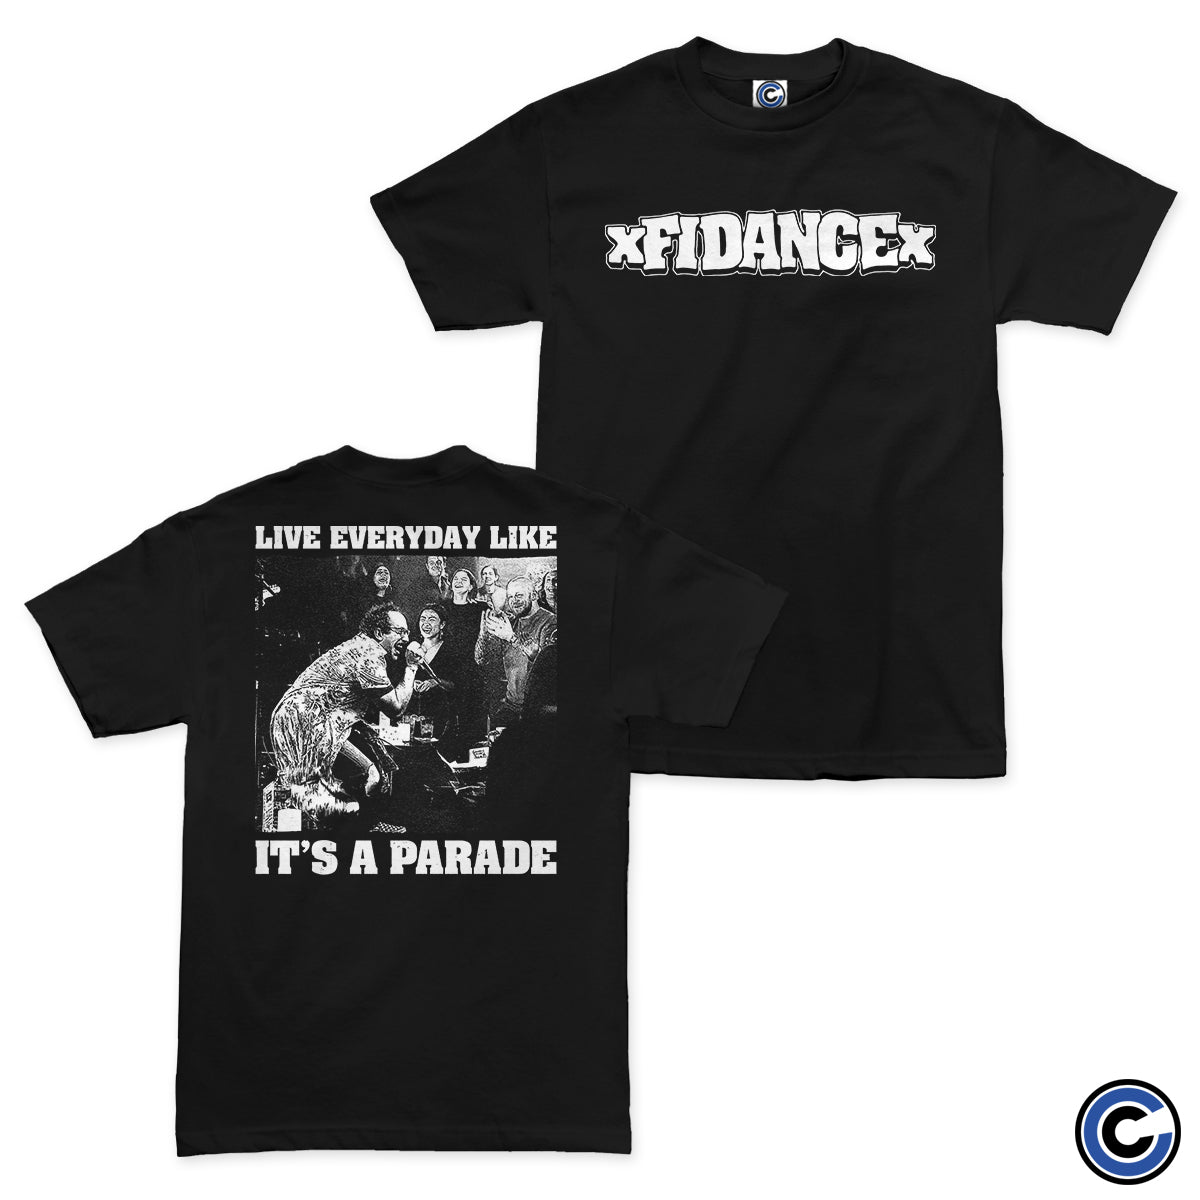 Ian Fidance "Parade" Shirt